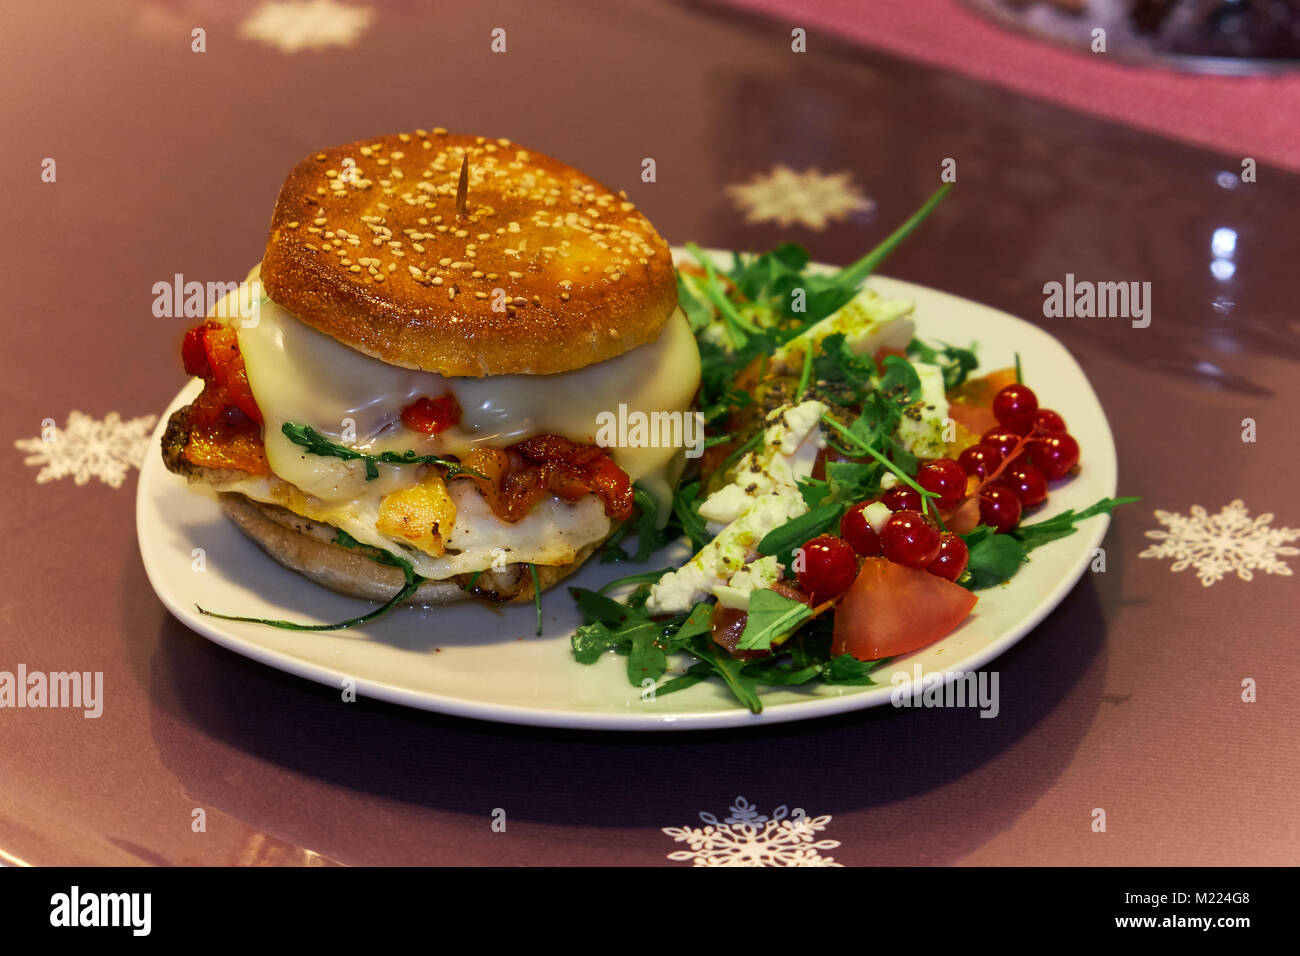 Burger with Egg, Bacon & Salad Stock Photo